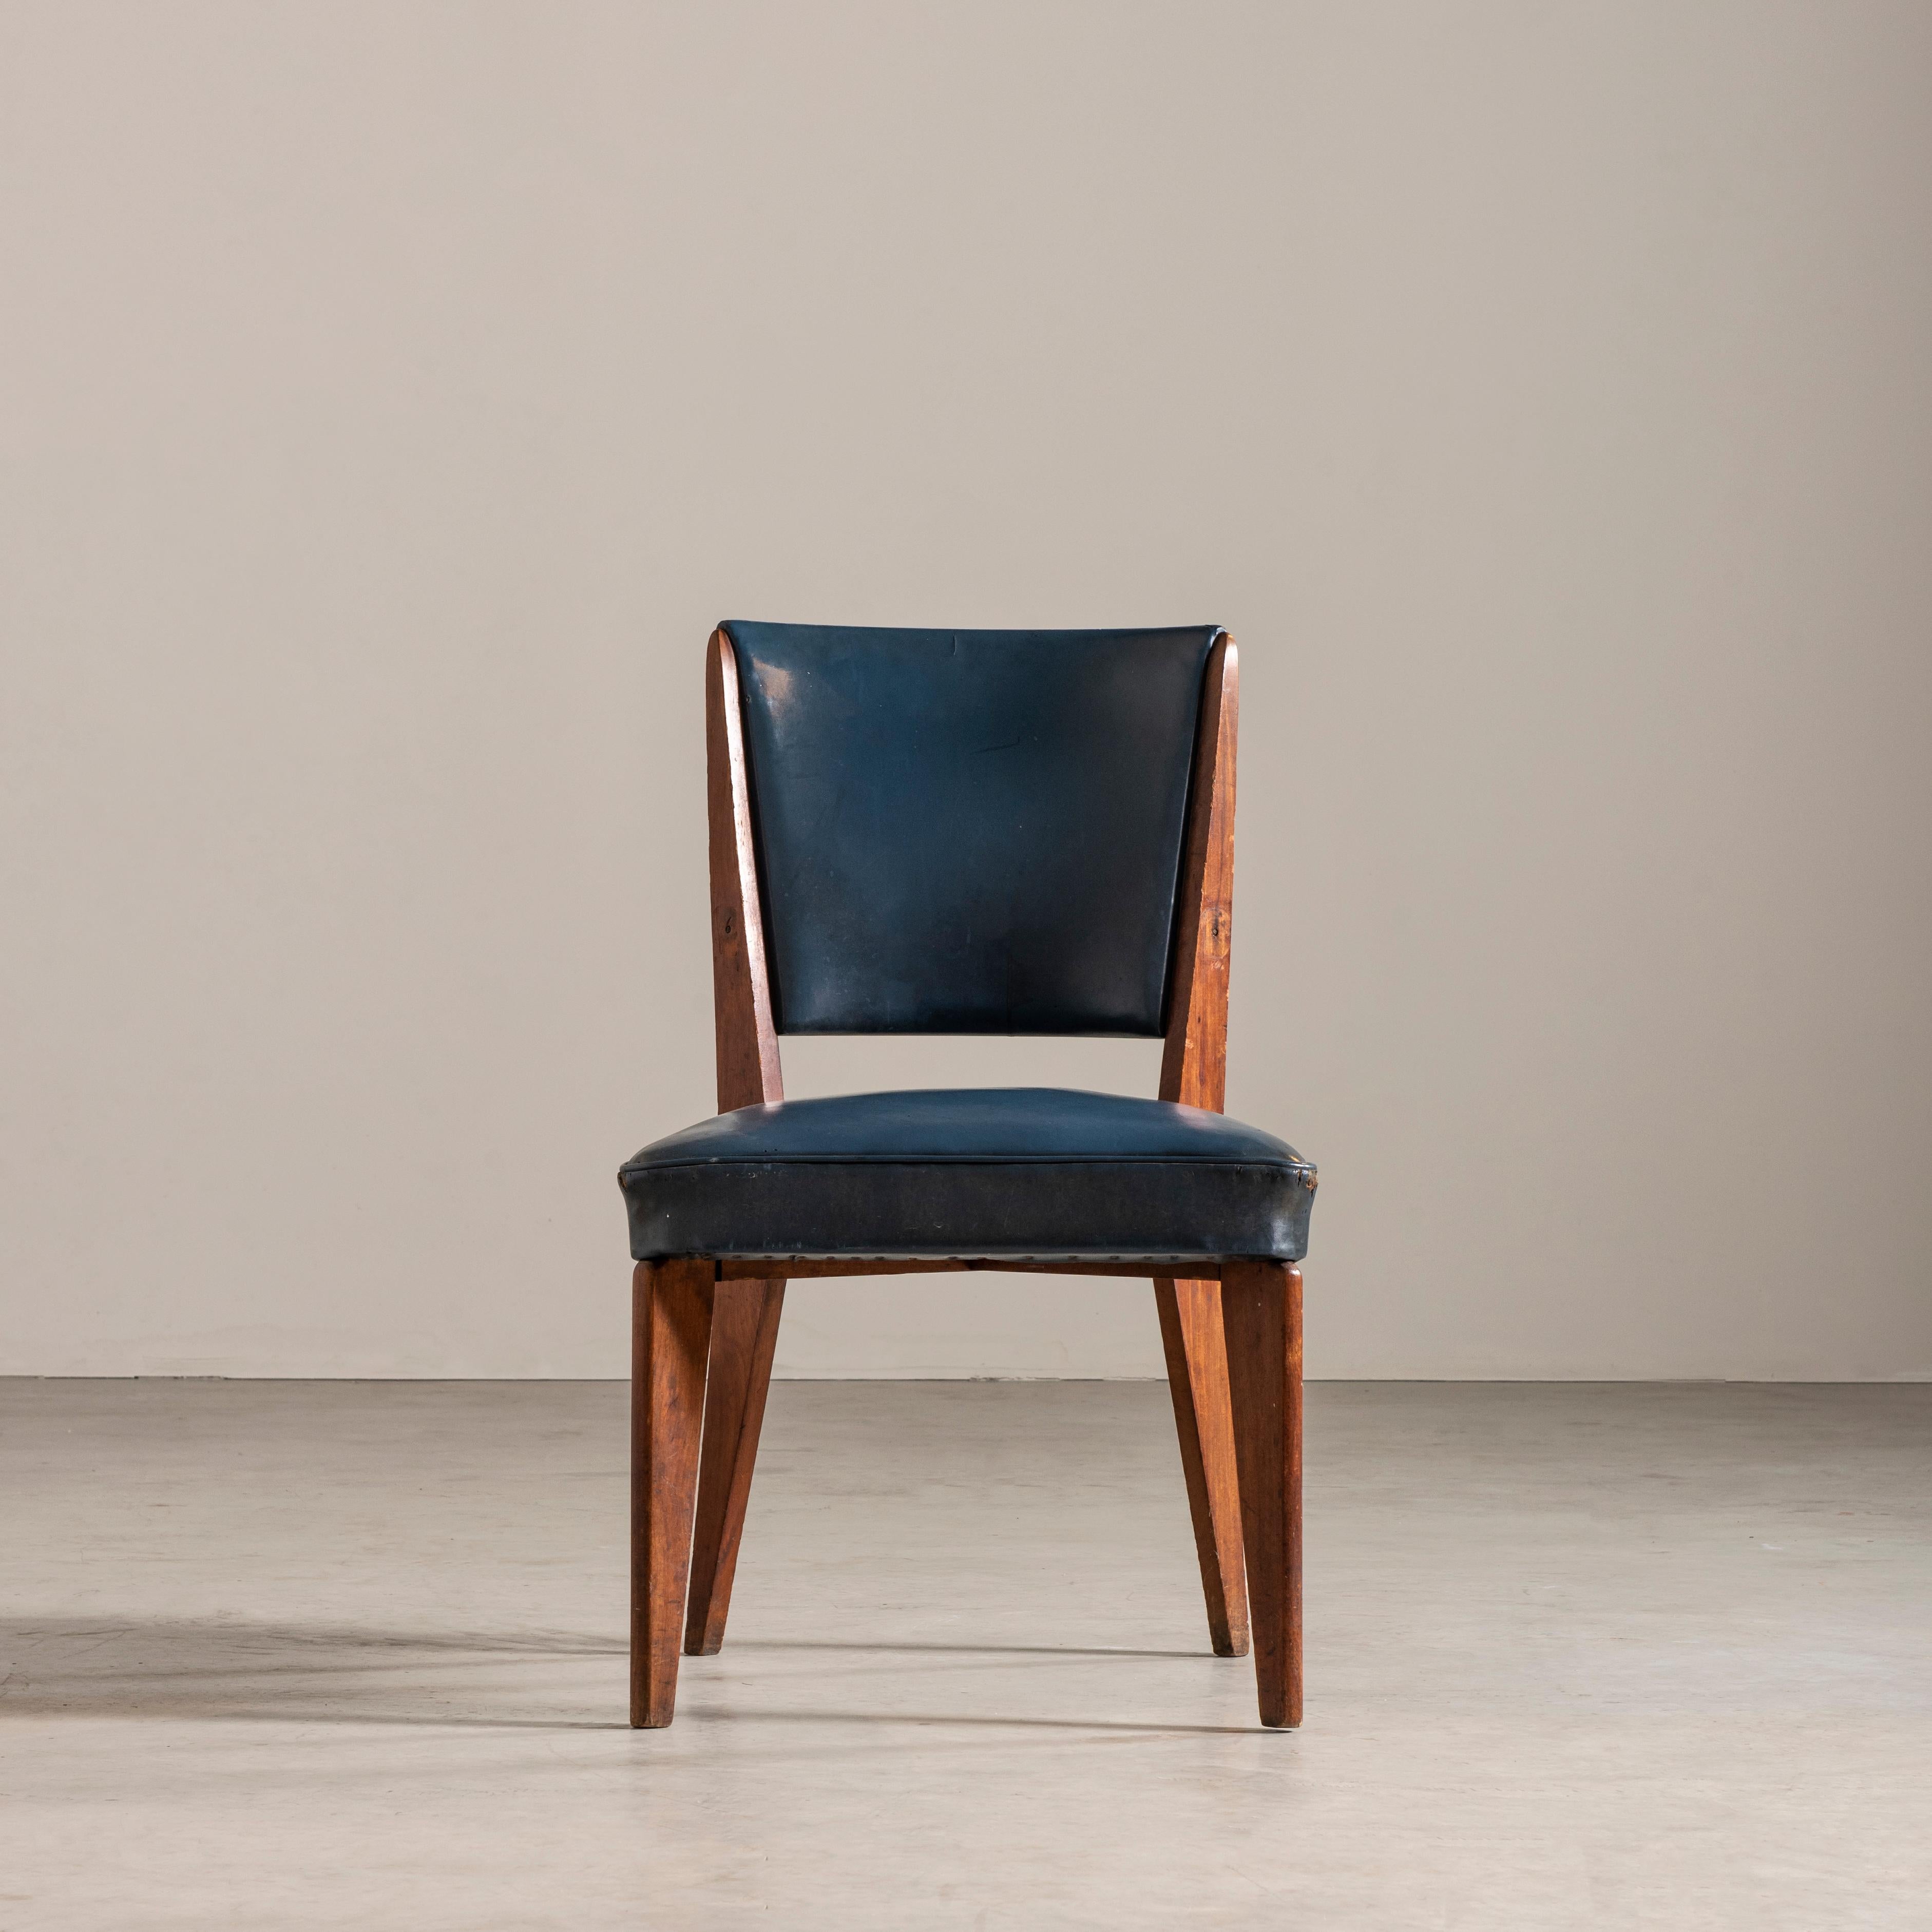 20th Century C12 Chairs, Lina Bo Bardi for Paubra, 1950s, Brazilian Mid-Century Modern